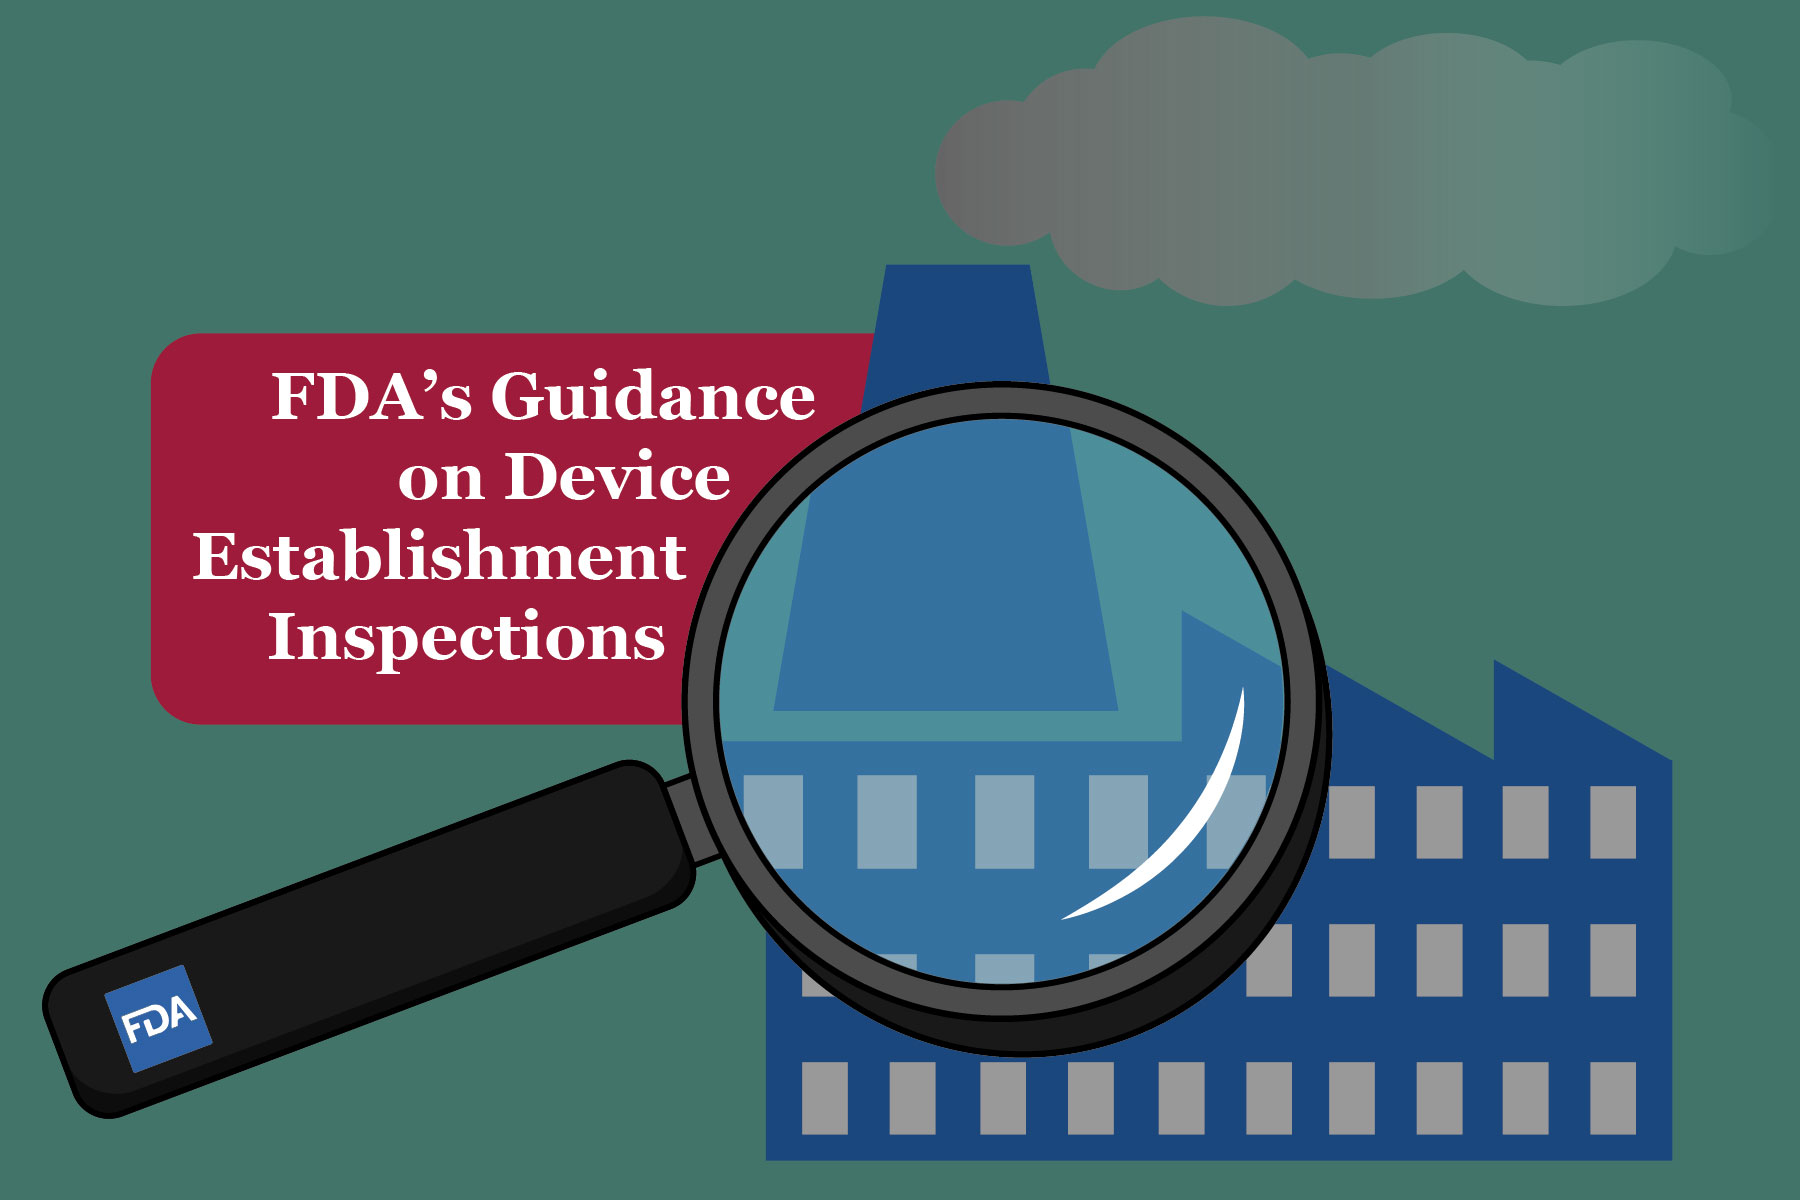 FDA’s Guidance on Device Establishment Inspections